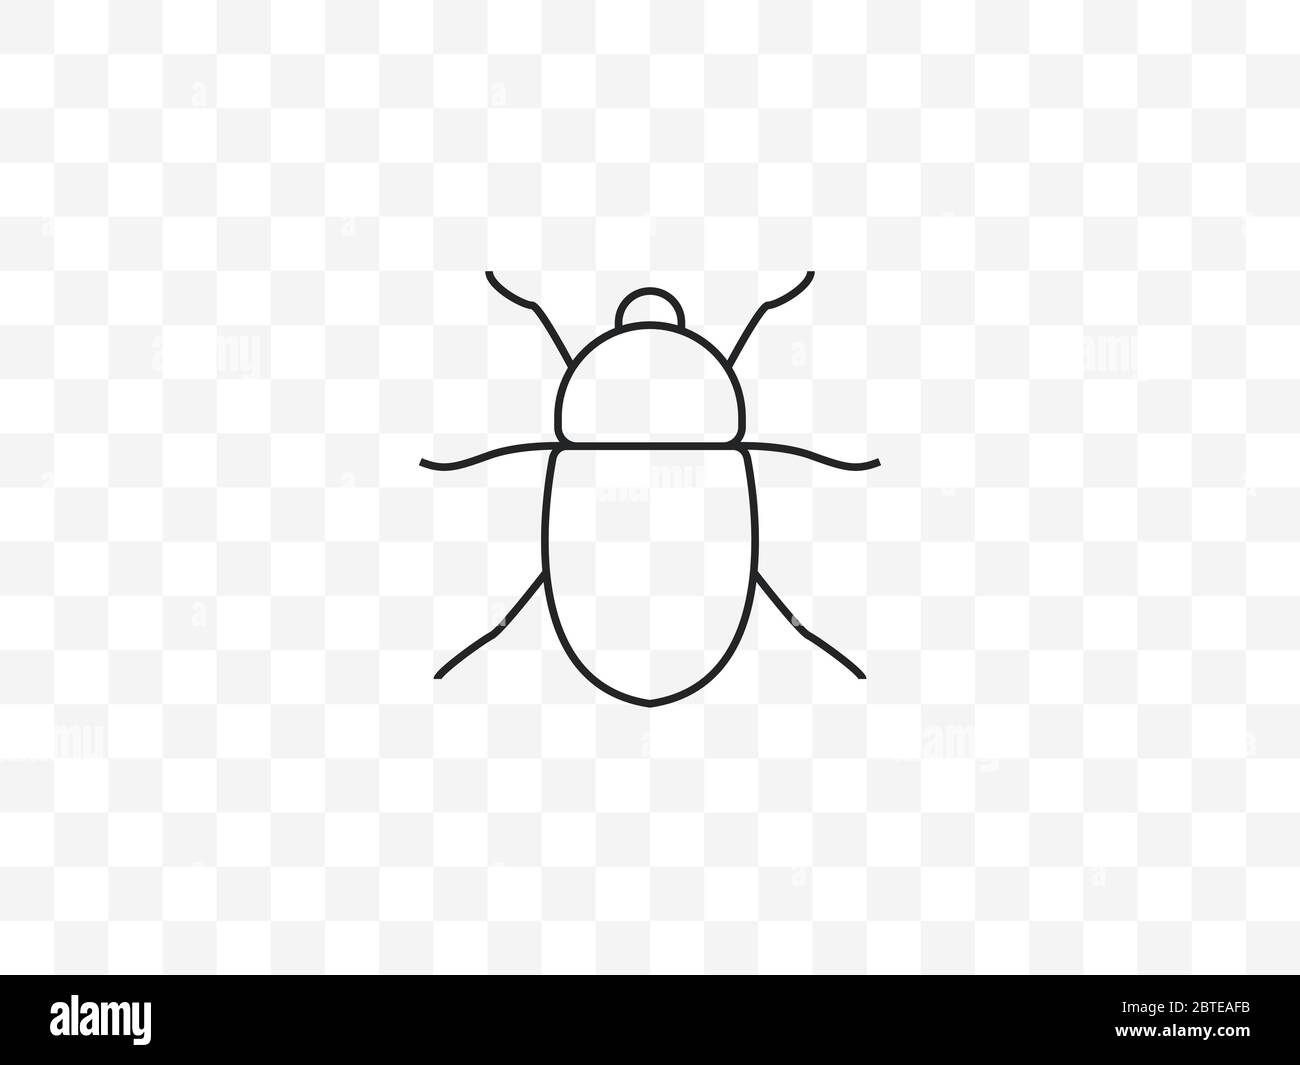 Symbol für Tier, Käfer, Insekten. Vektorgrafik, flaches Design. Stock Vektor